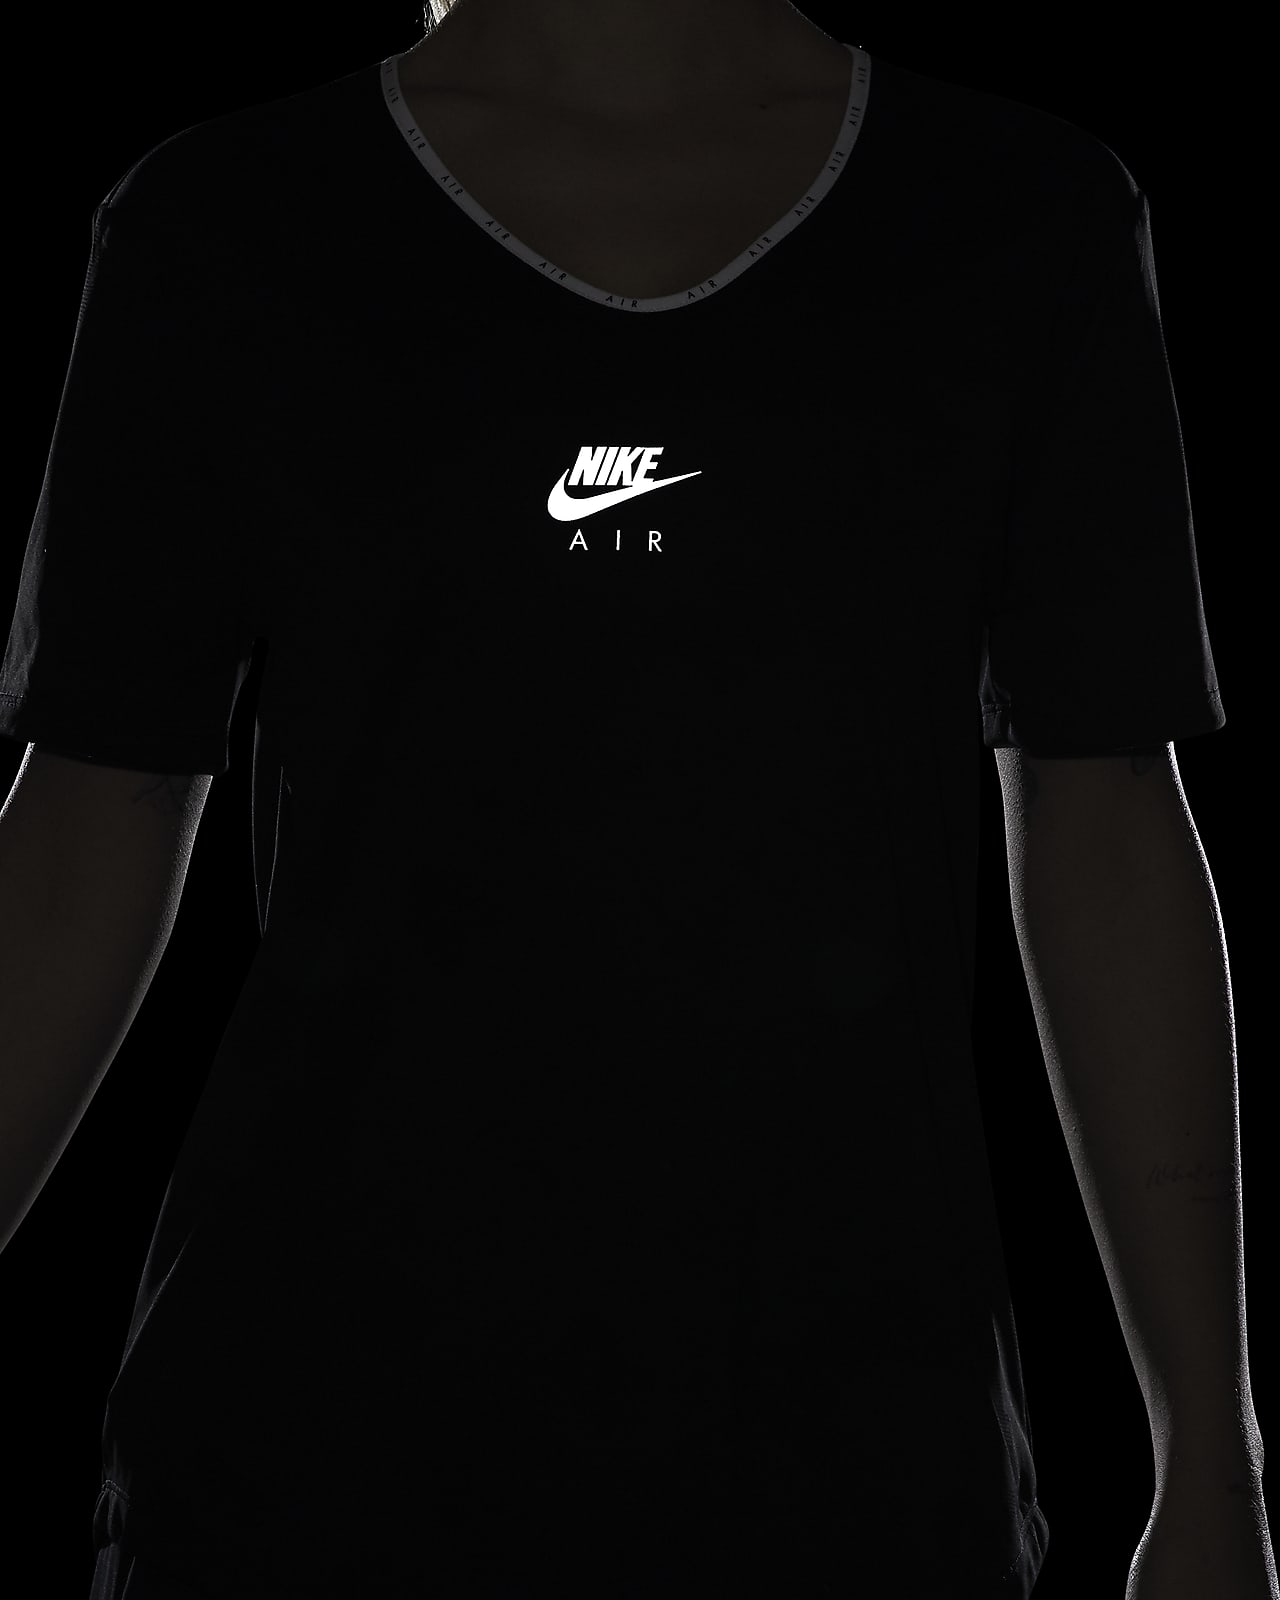 Mal Parpadeo Español Nike Air Camiseta de running - Mujer. Nike ES